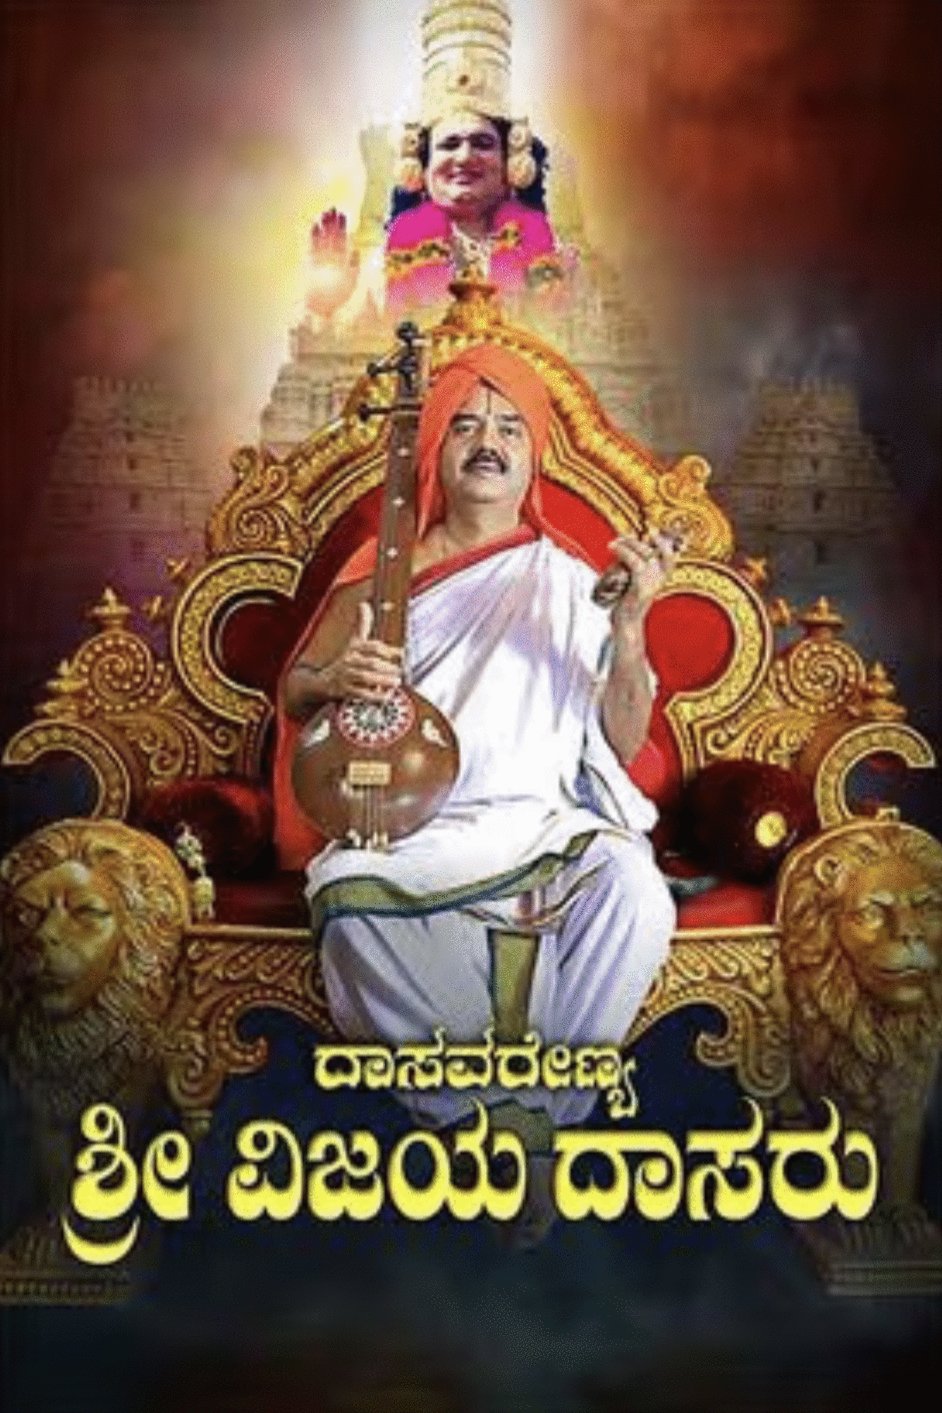 Kannada poster of the movie Dasavarenya Sri Vijayadasaru